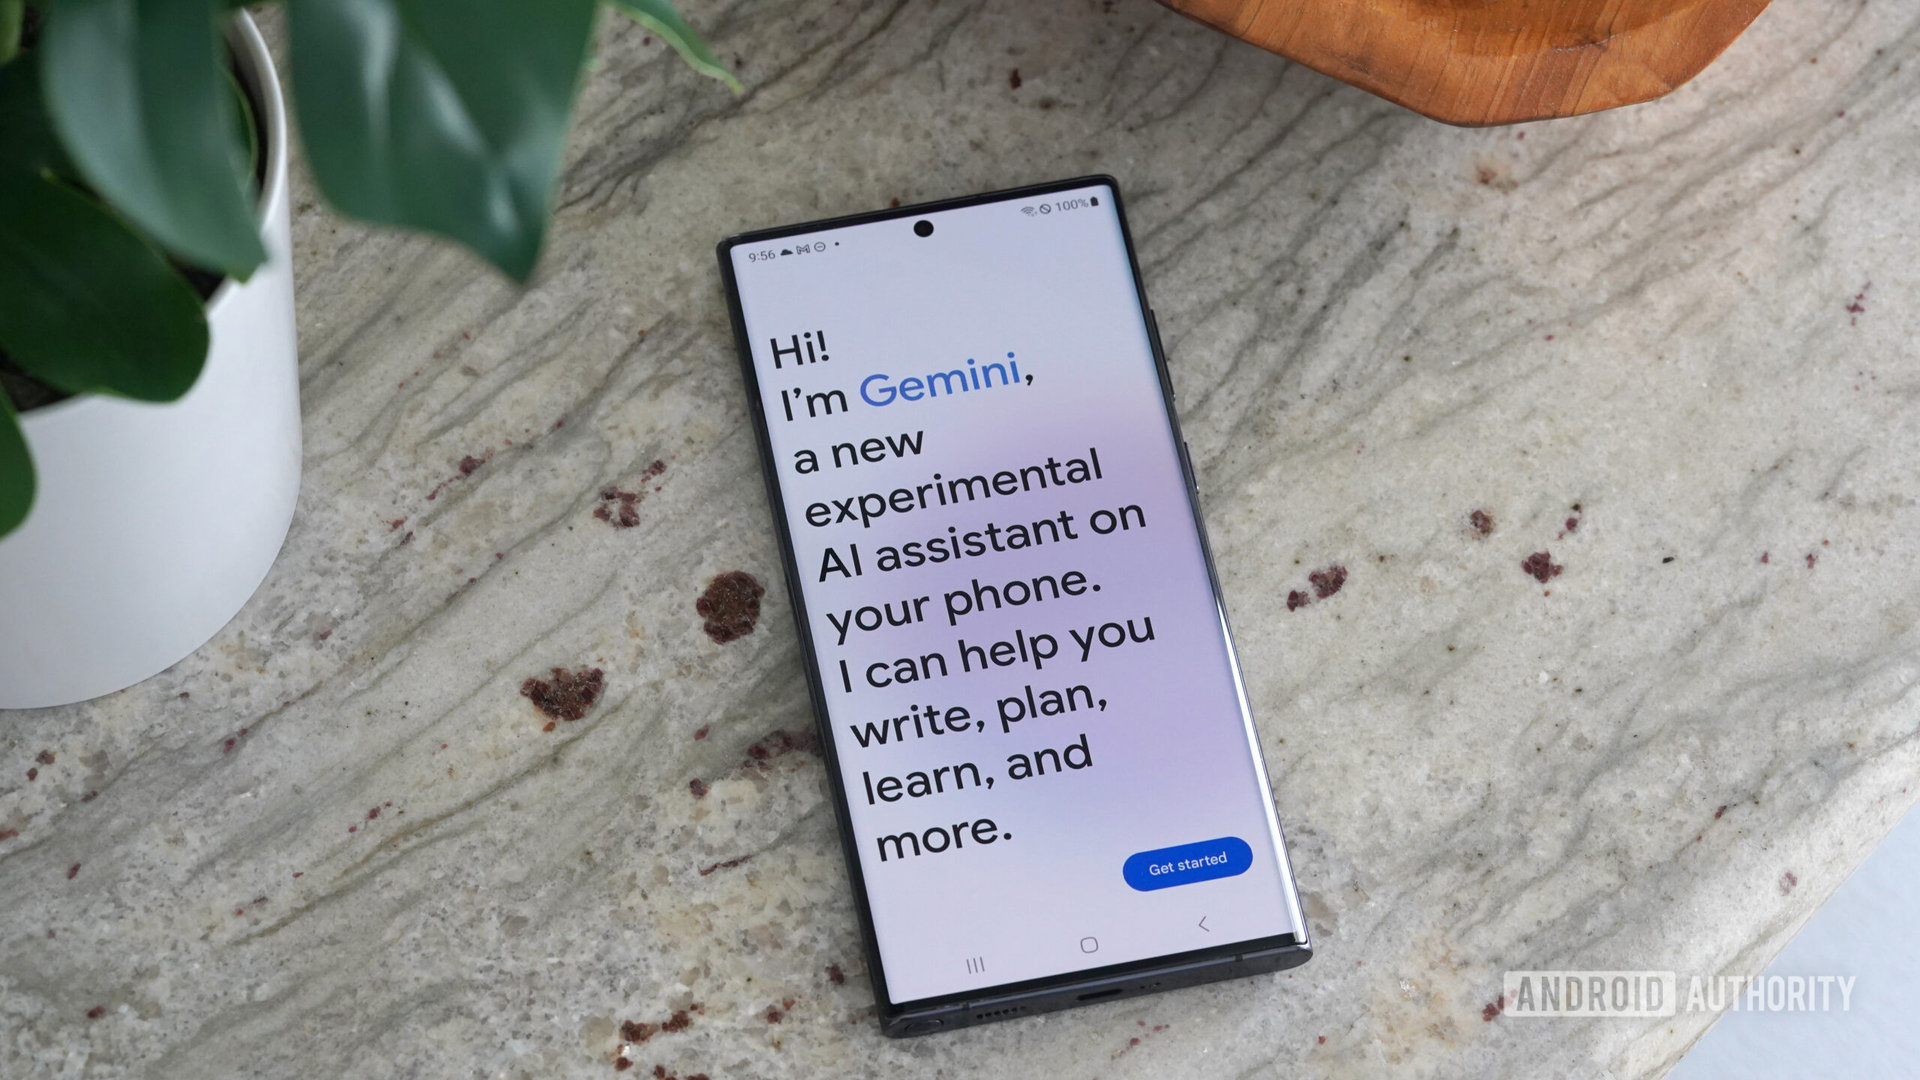 Die Google Assistant-Android-App heißt jetzt standardmäßig Gemini